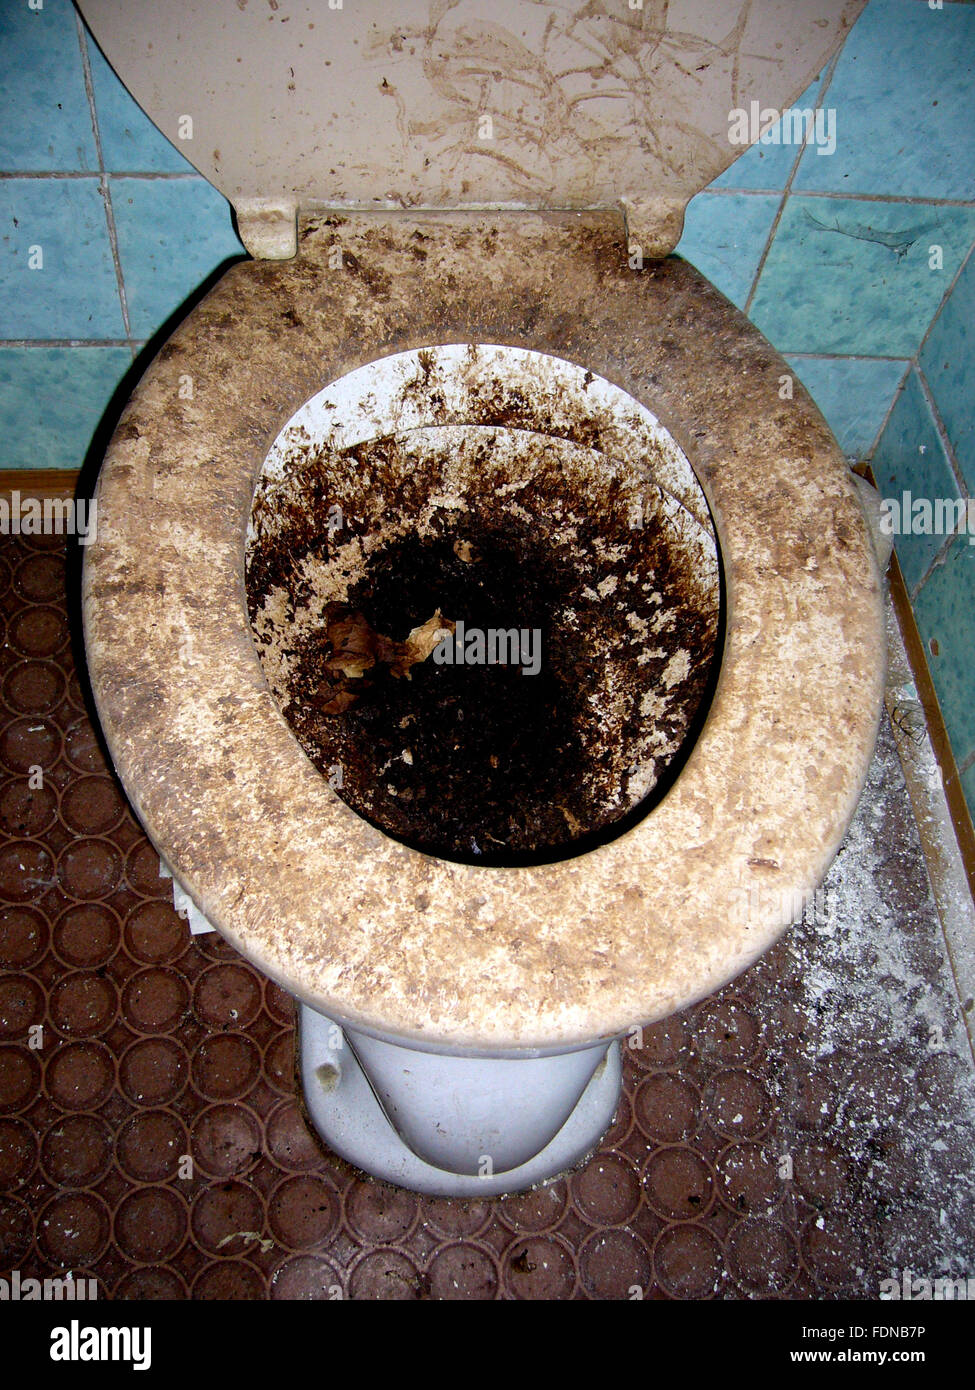 Toilette, Schmutz, Kot Stockfotografie - Alamy